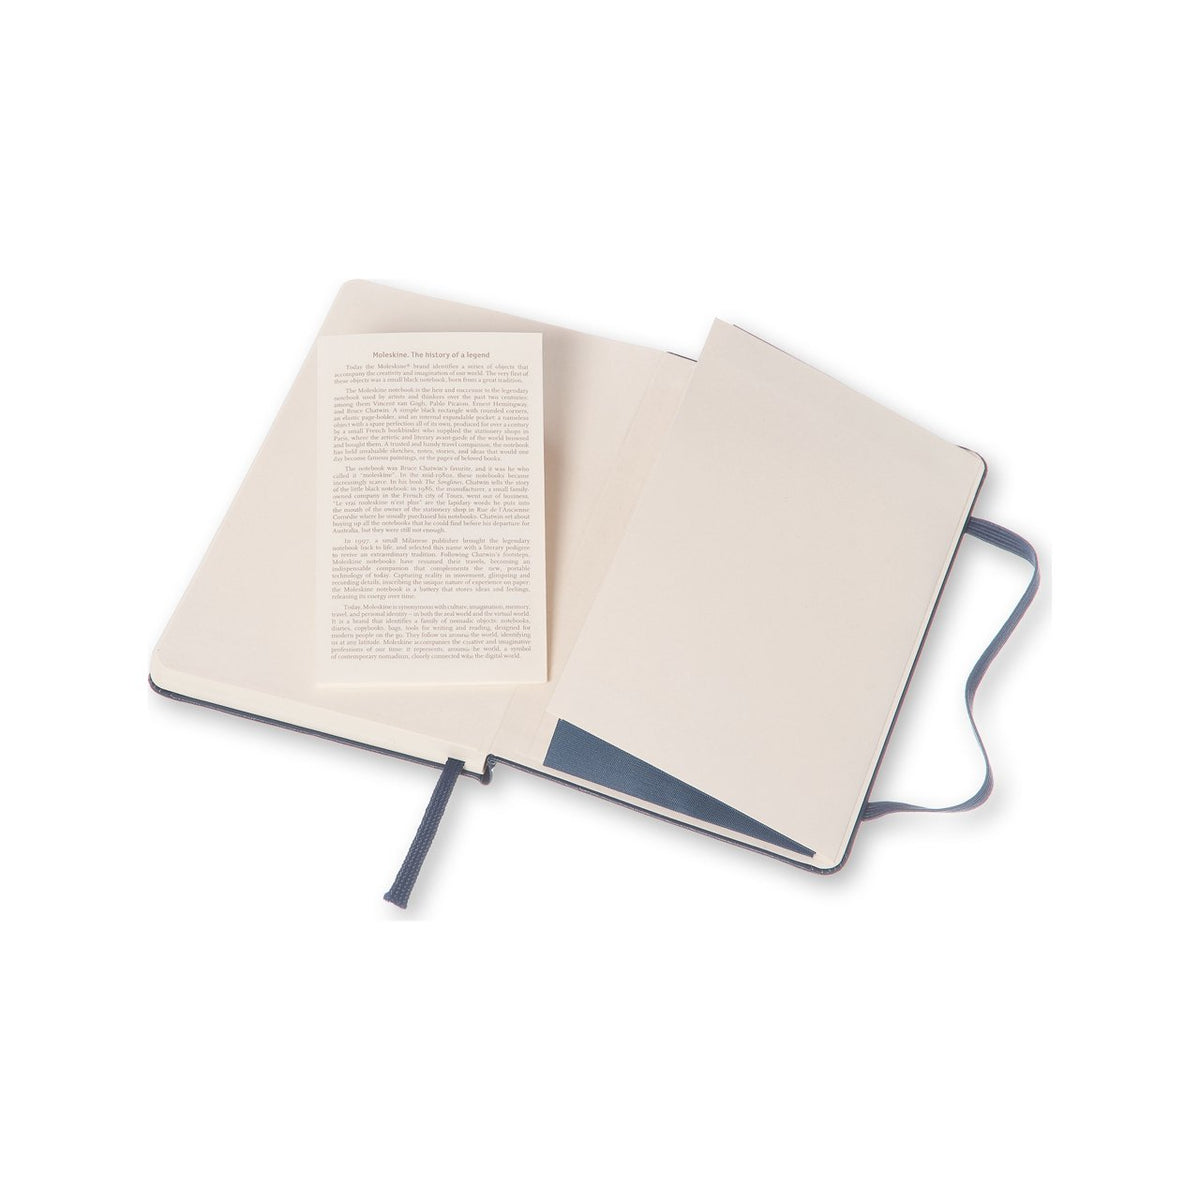 Moleskine - Classic Hard Cover Notebook - Plain - Pocket - Sapphire Blue